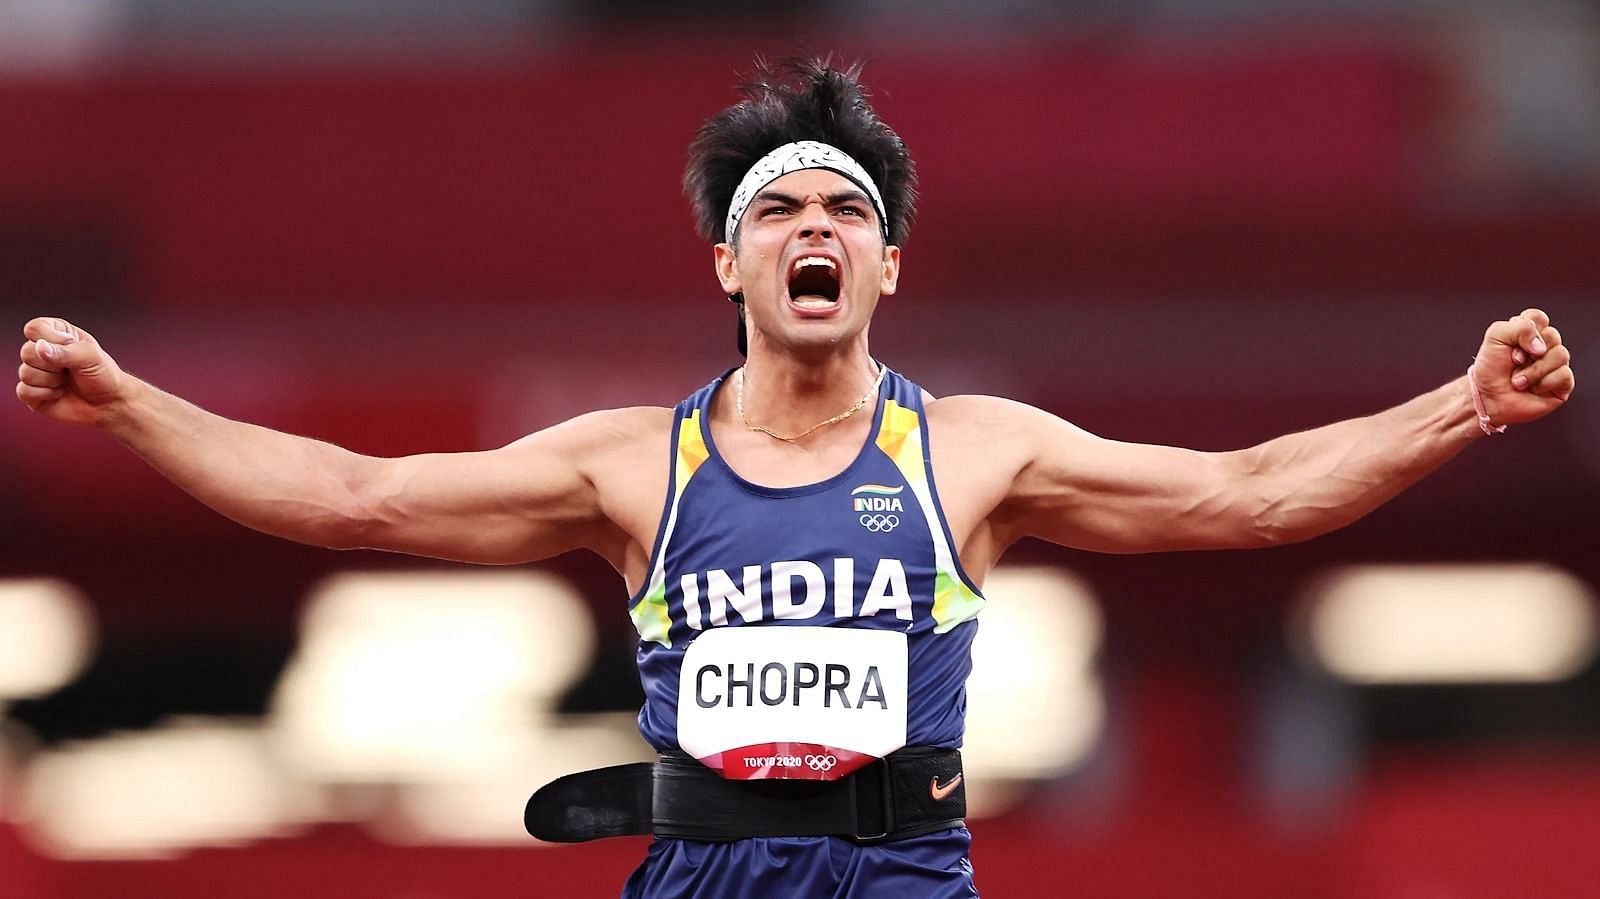 Neeraj Chopra celebrates his record-breaking throw (Image Credits: Olympics.com)